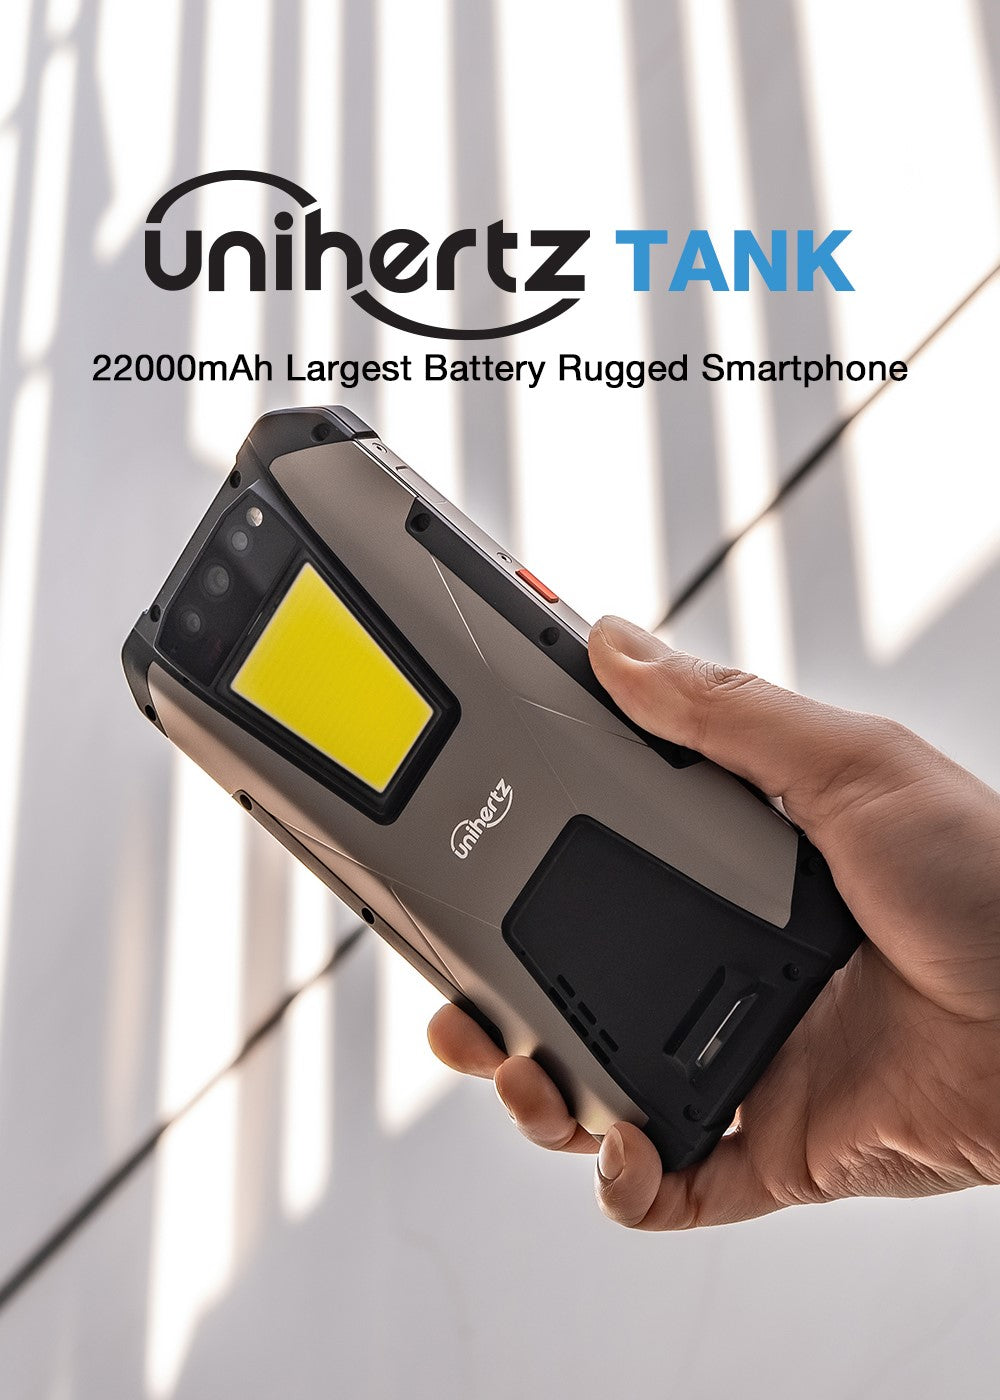 Unihertz Tank - 22000mAh Largest Battery Rugged Smartphone